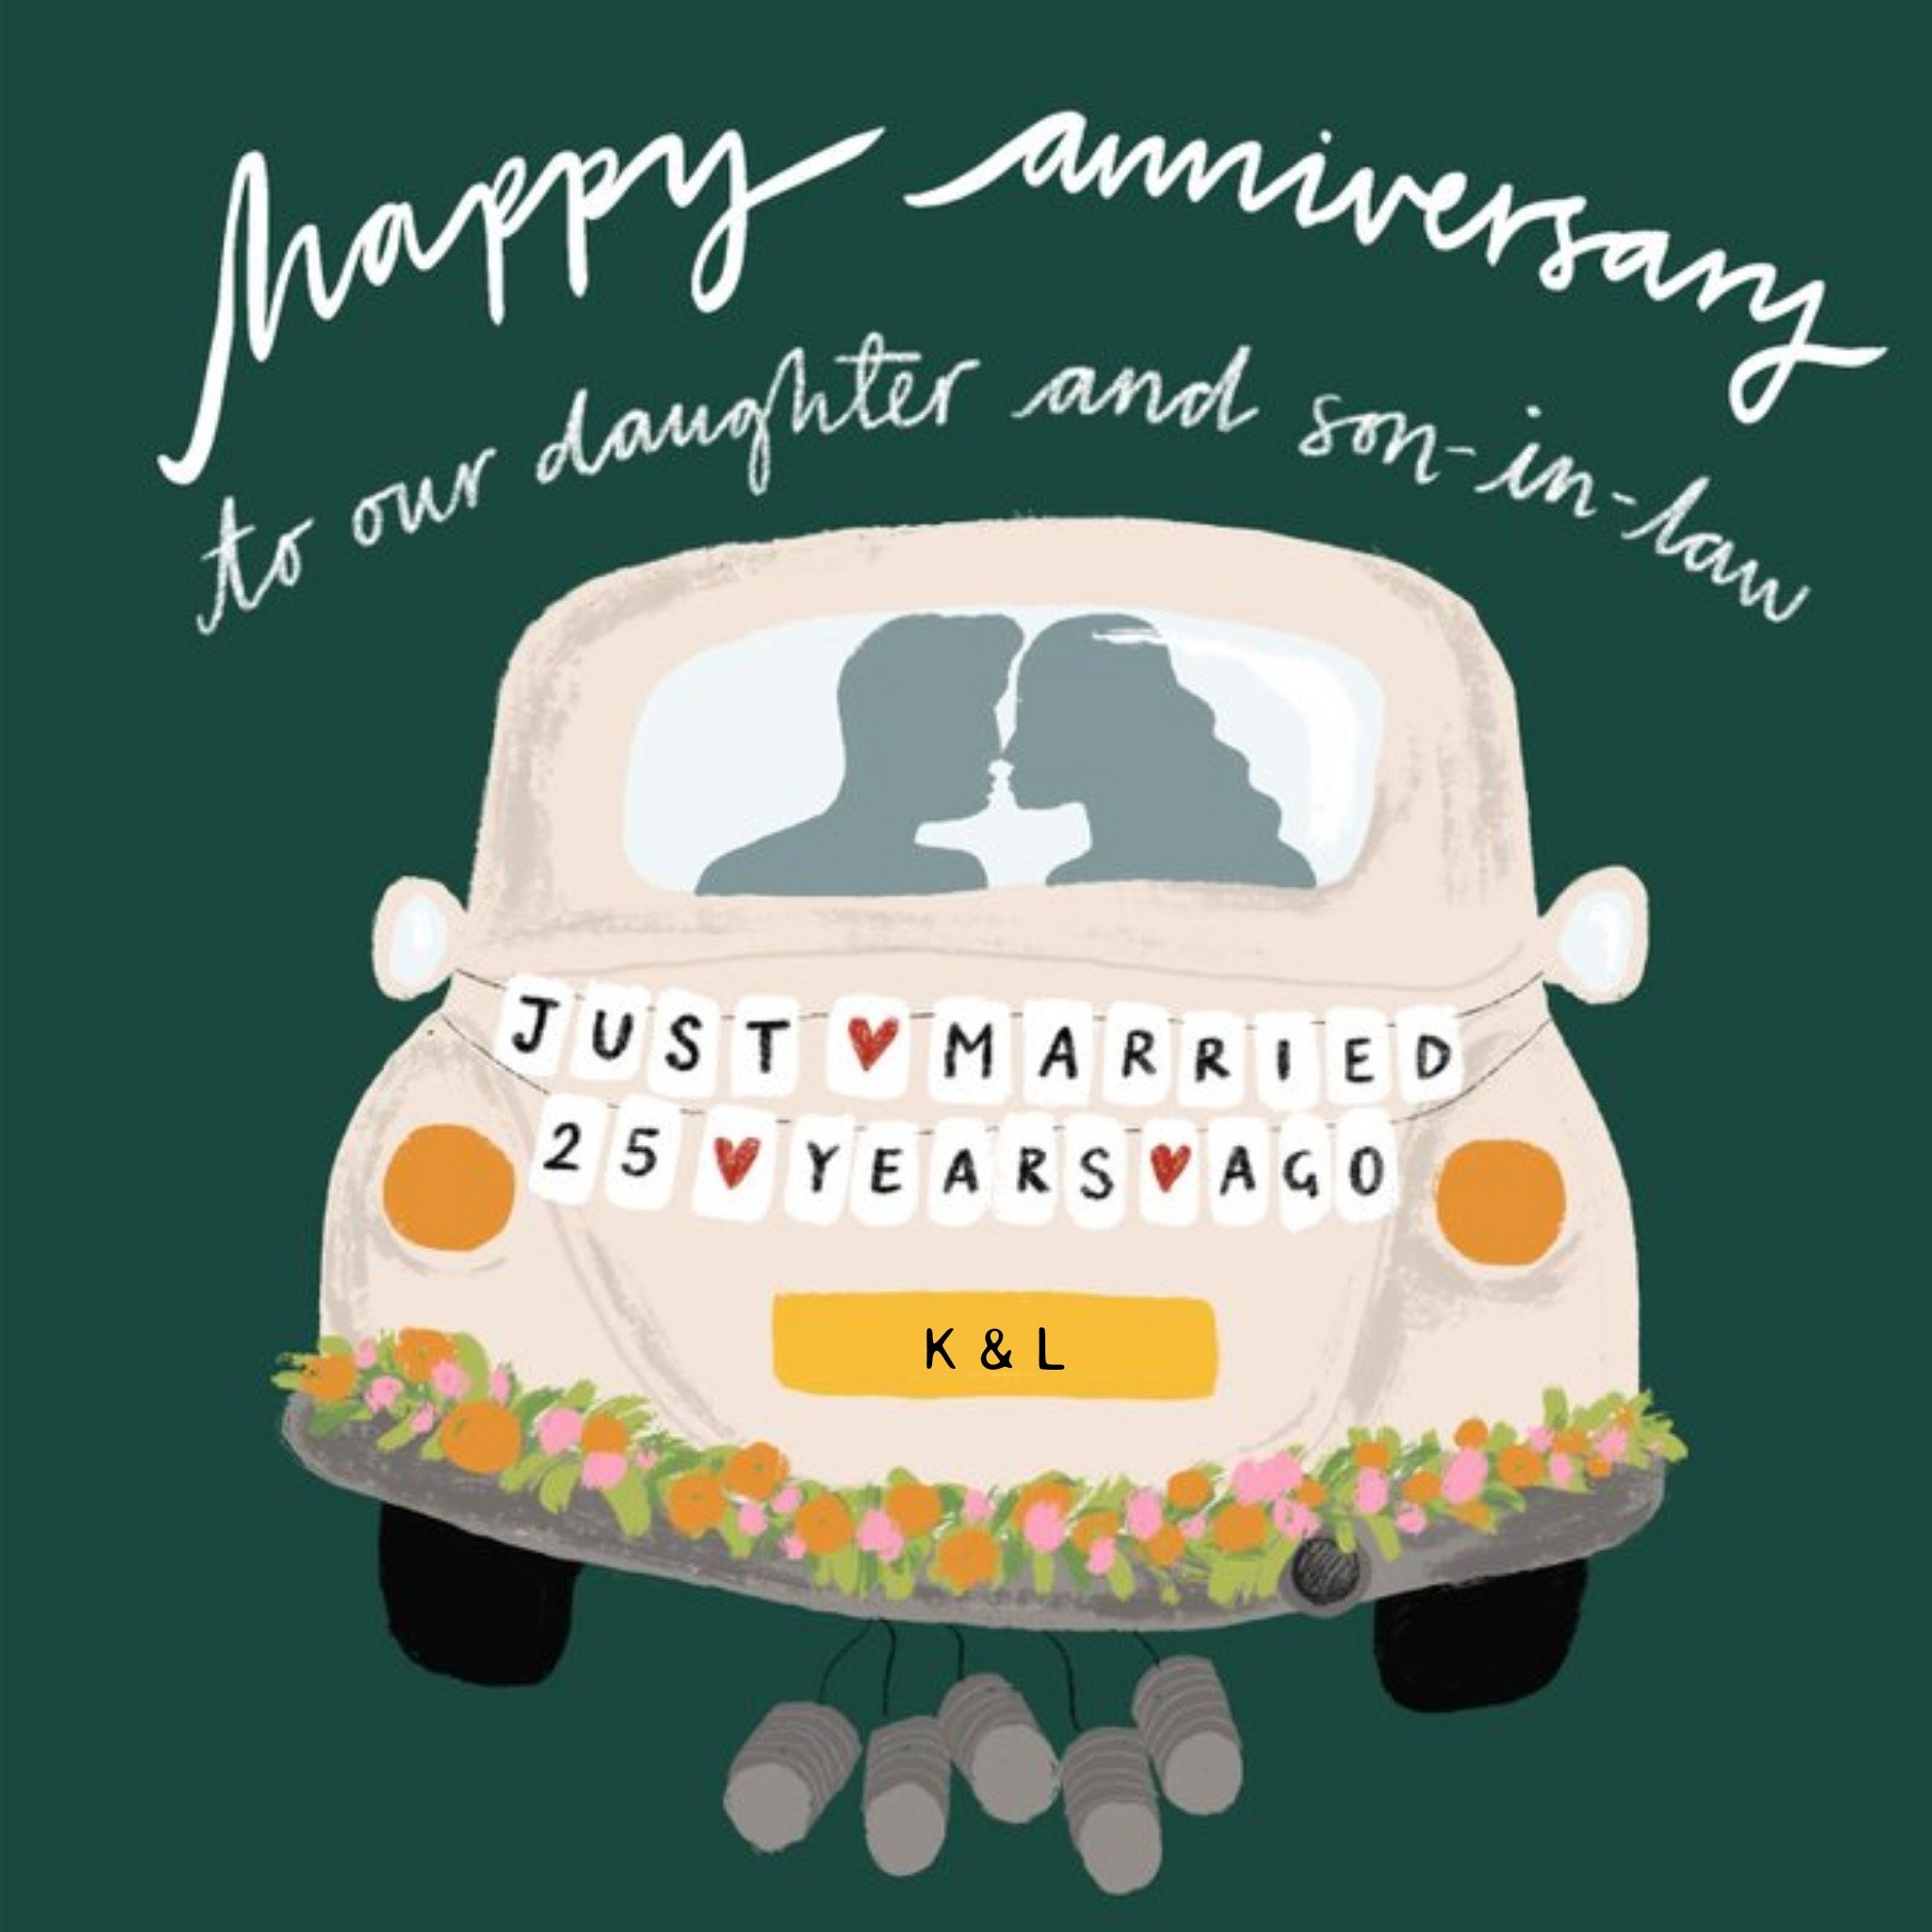 Moonpig Katy Welsh Wedding Car Editable Just Married Happy Anniversary Card, Large